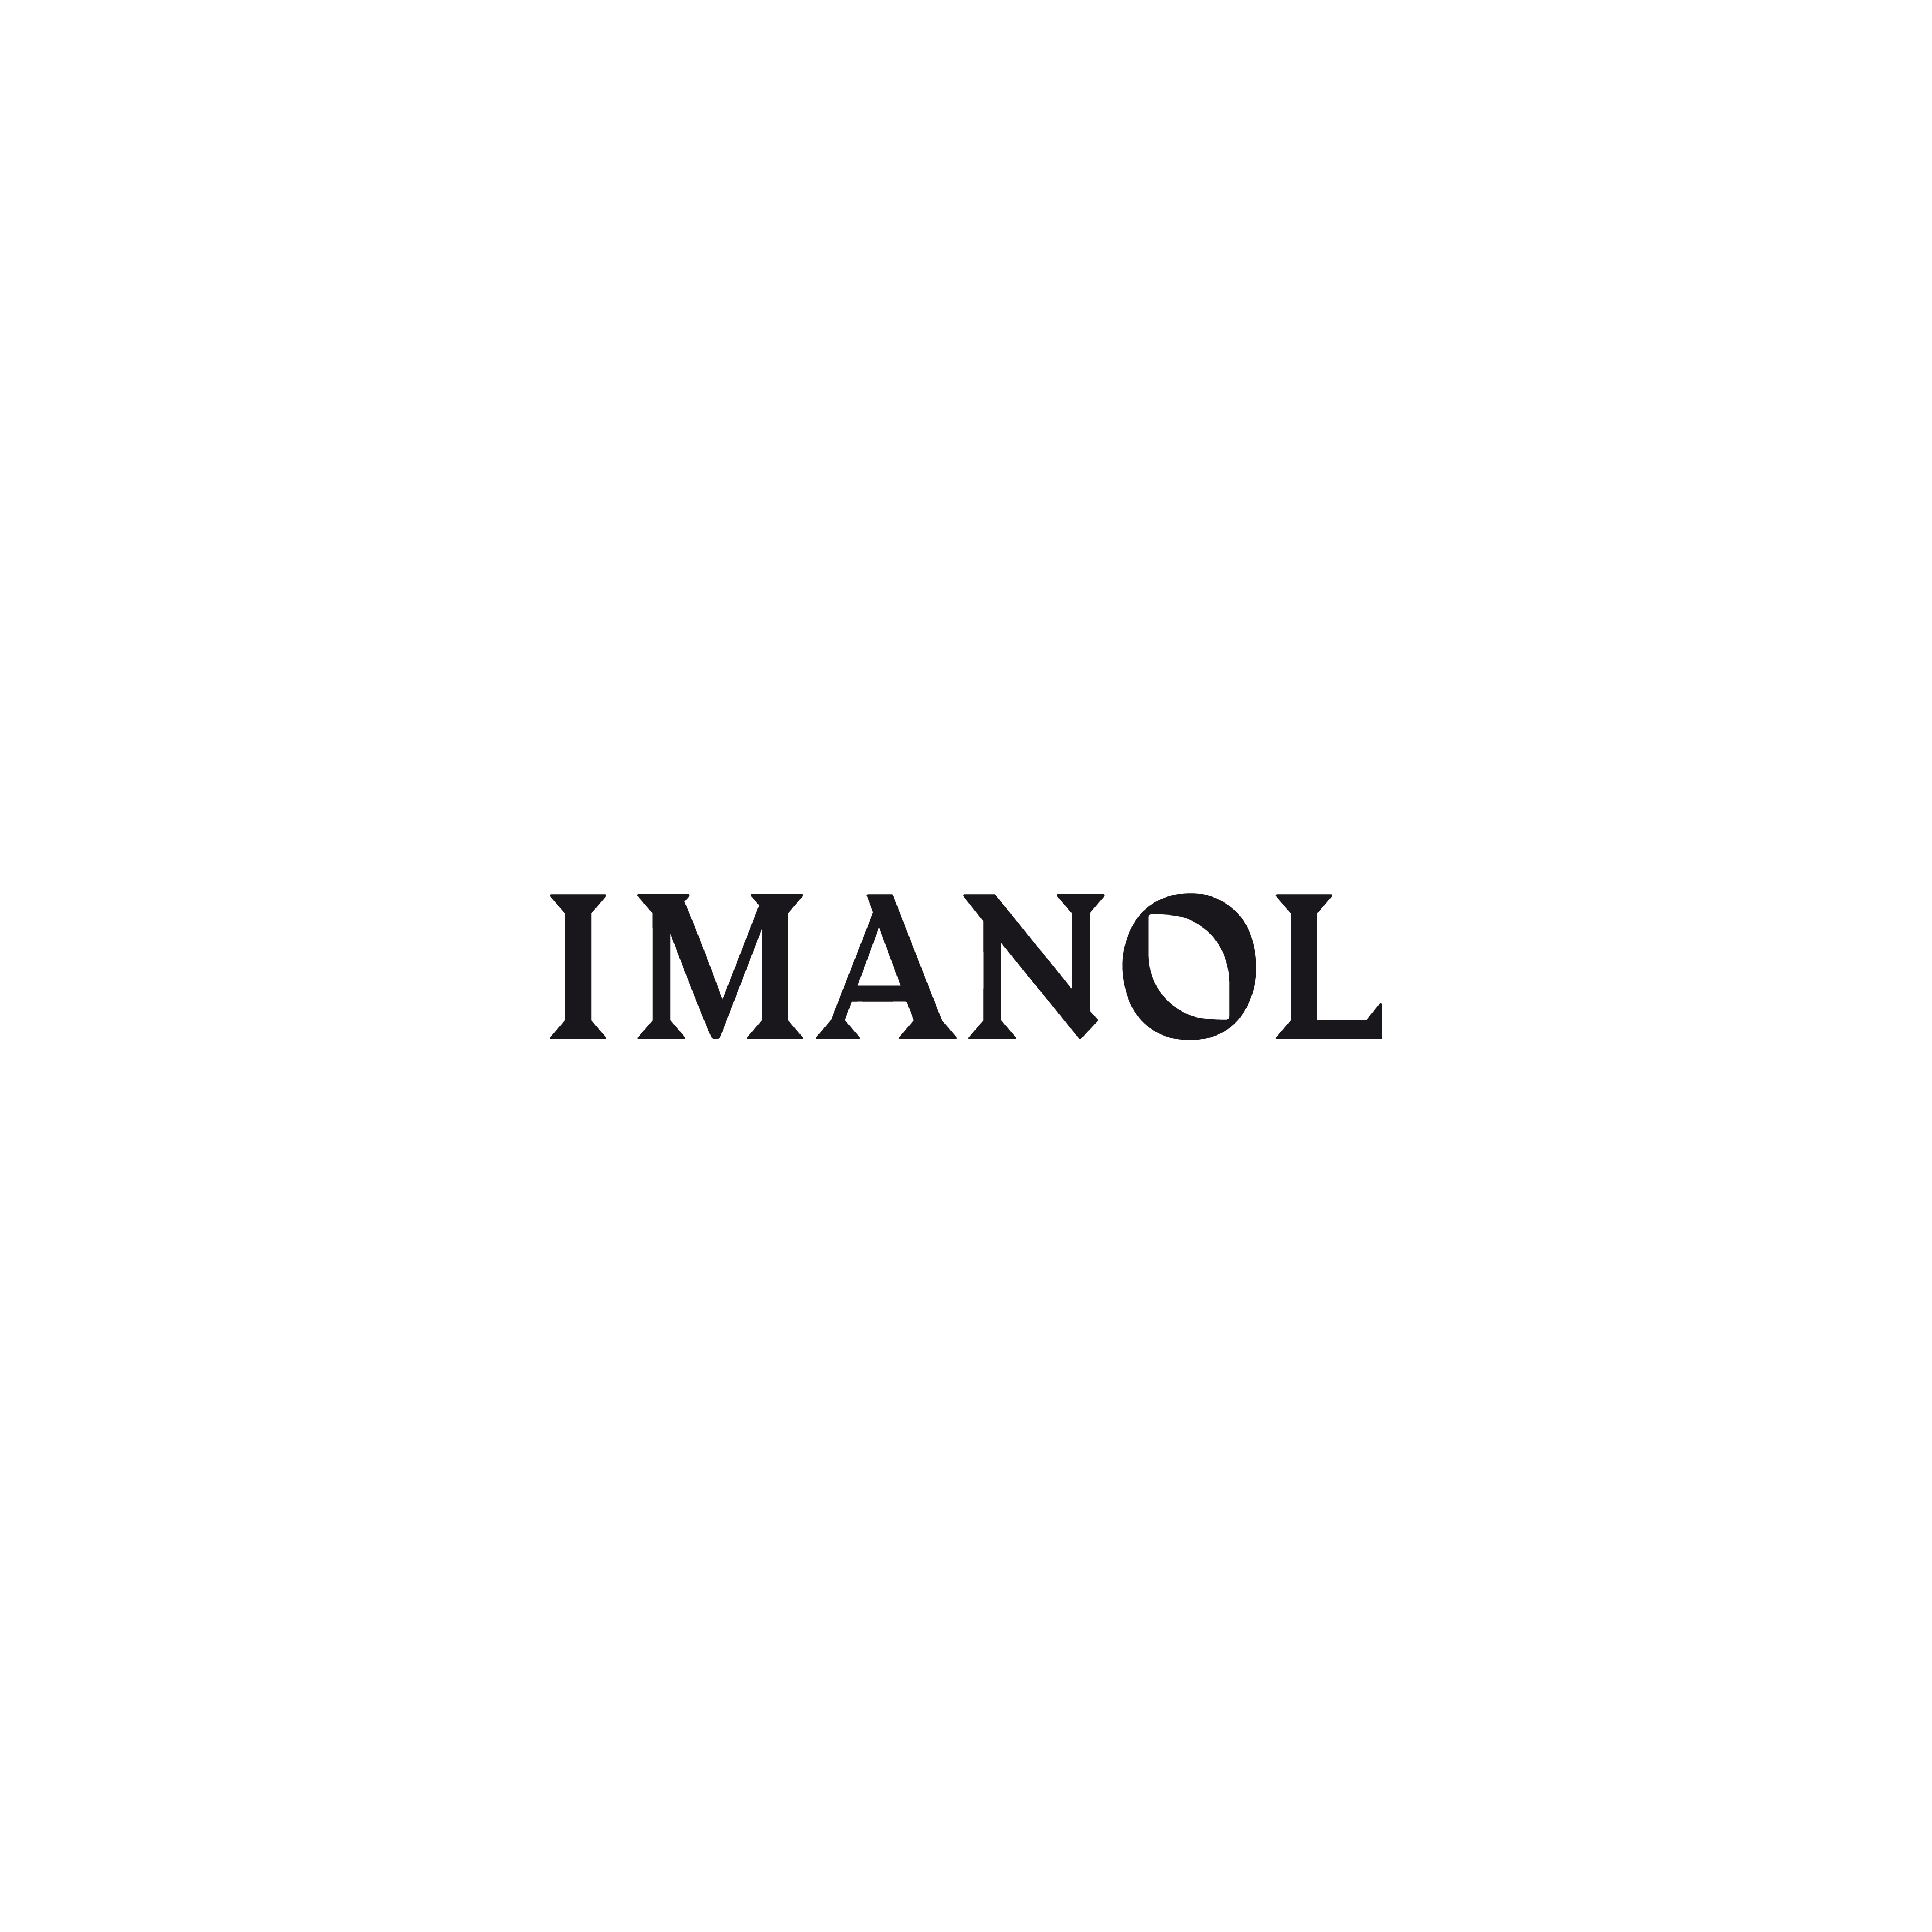 Imanol